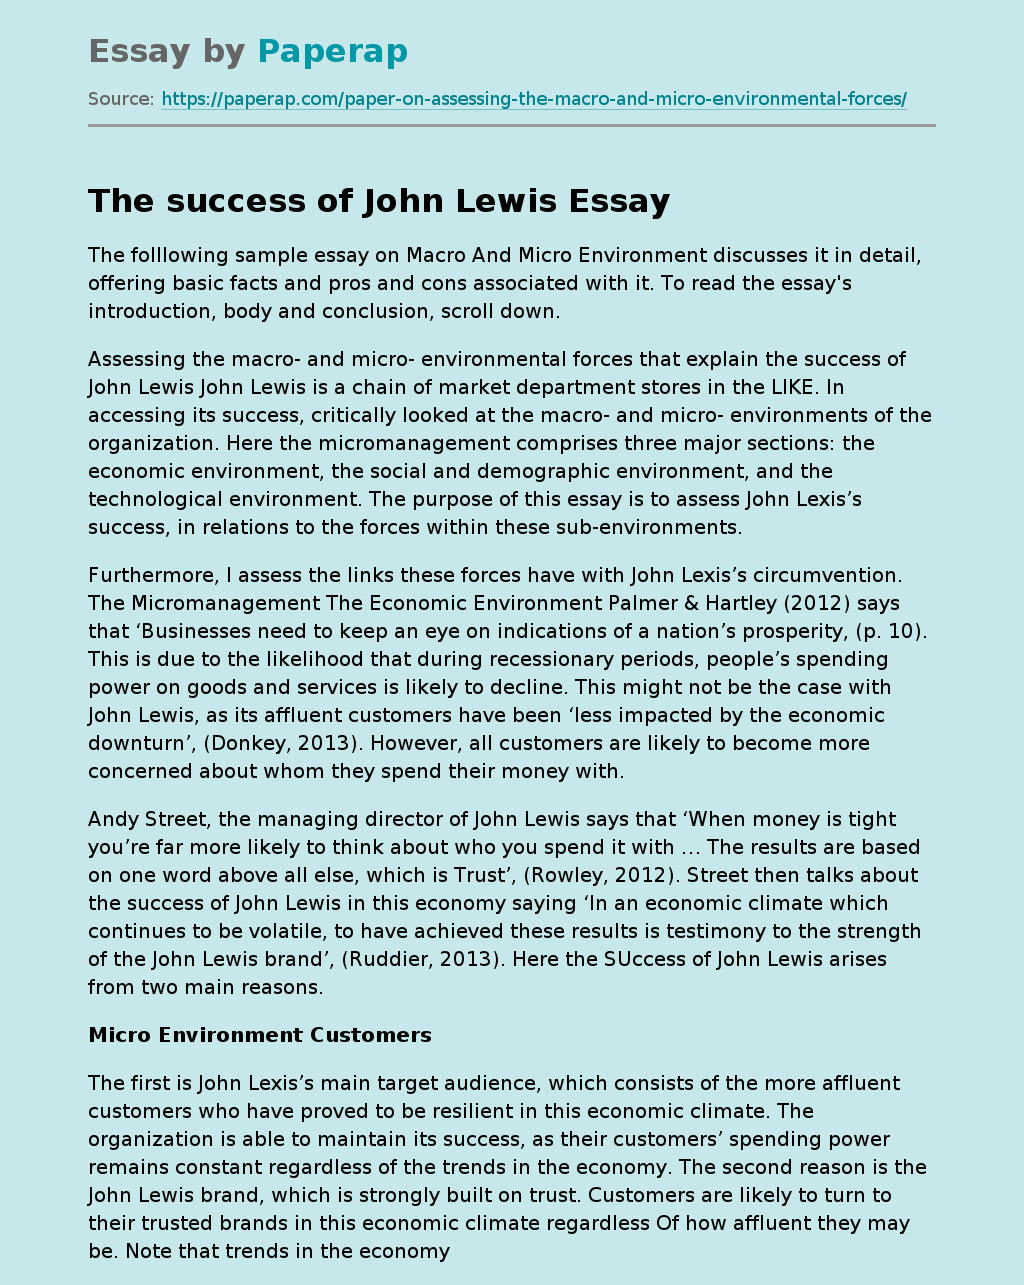 The success of John Lewis